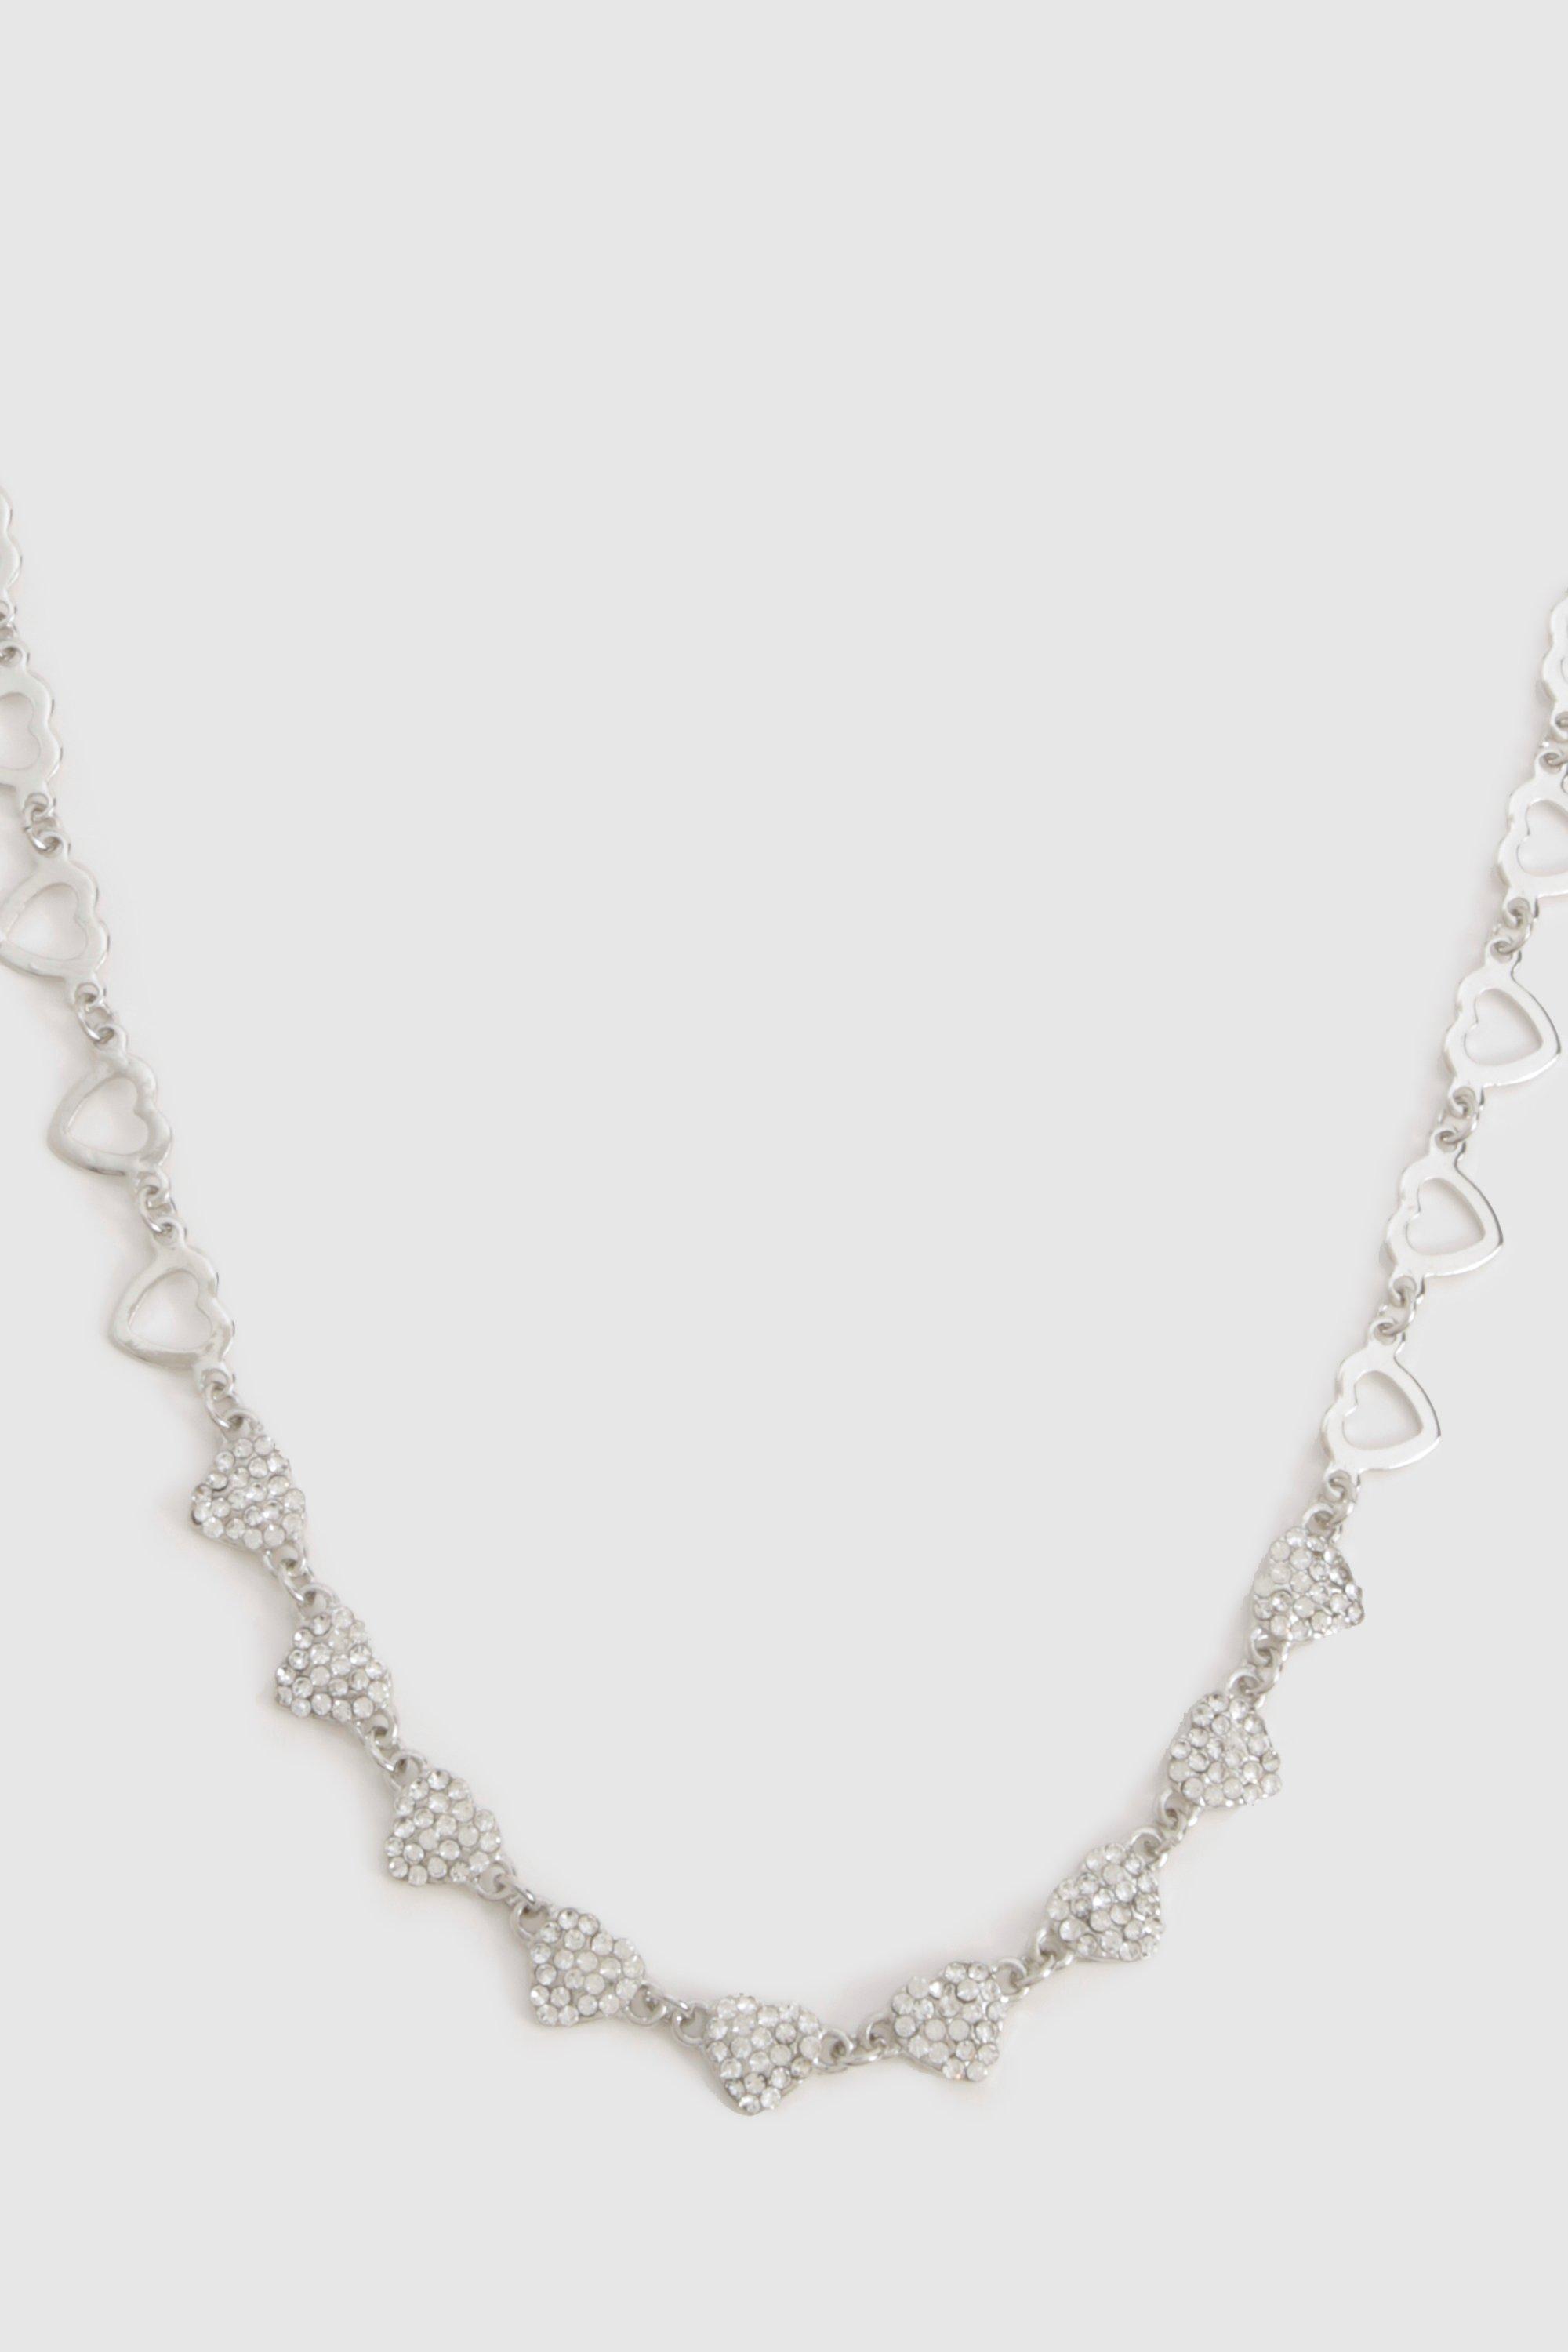 Image of Embellished Heart Necklace, Grigio